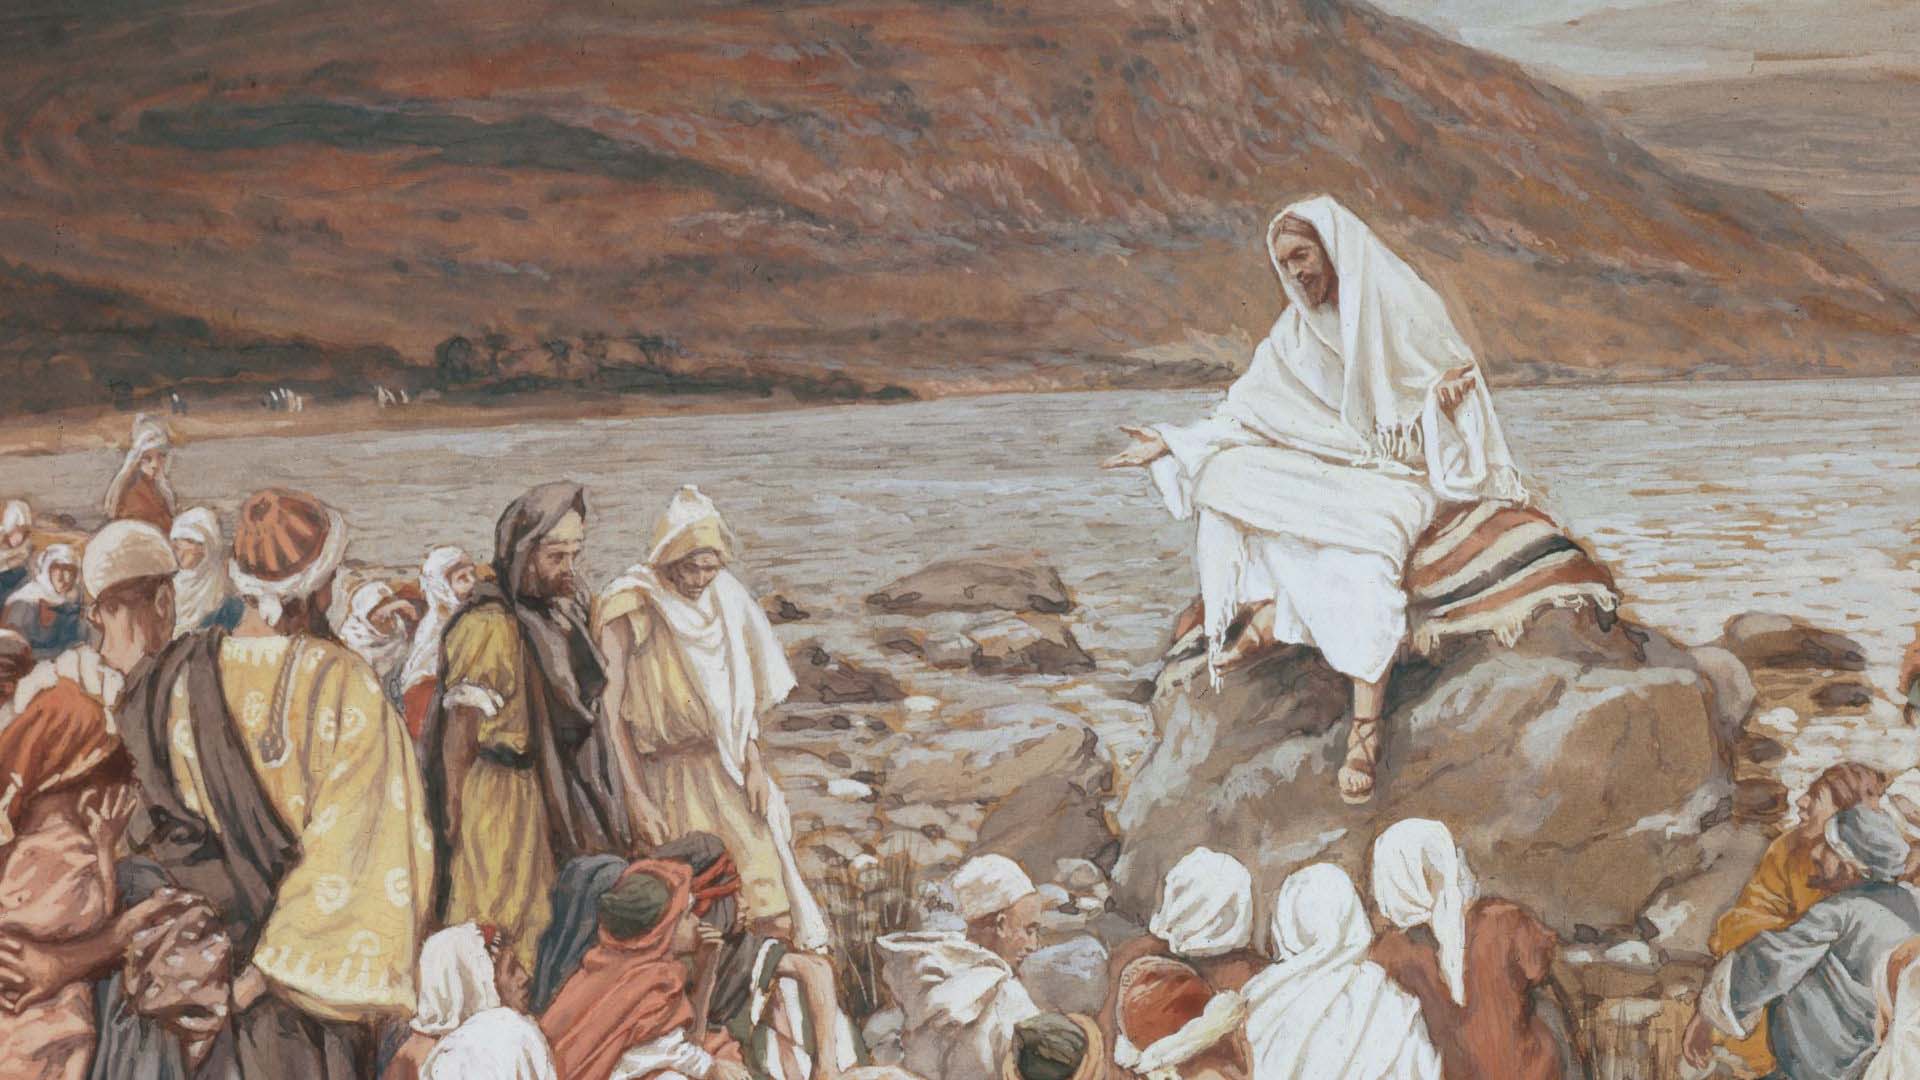 Jesus Teaching the People by the Seashore, by James Tissot. Image via Church of Jesus Christ.